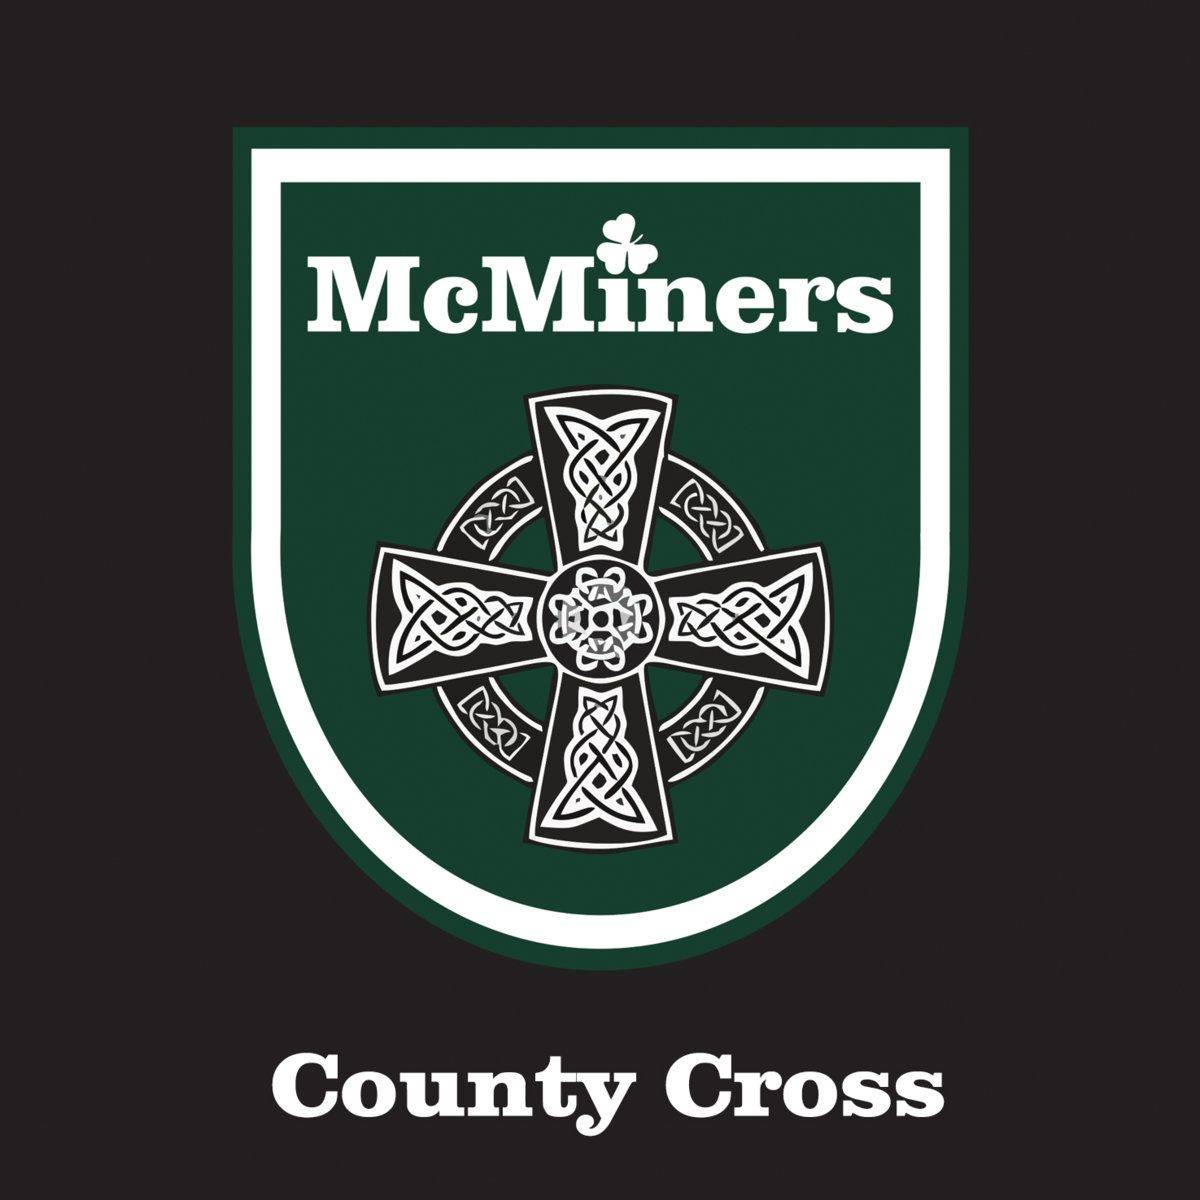 County Cross